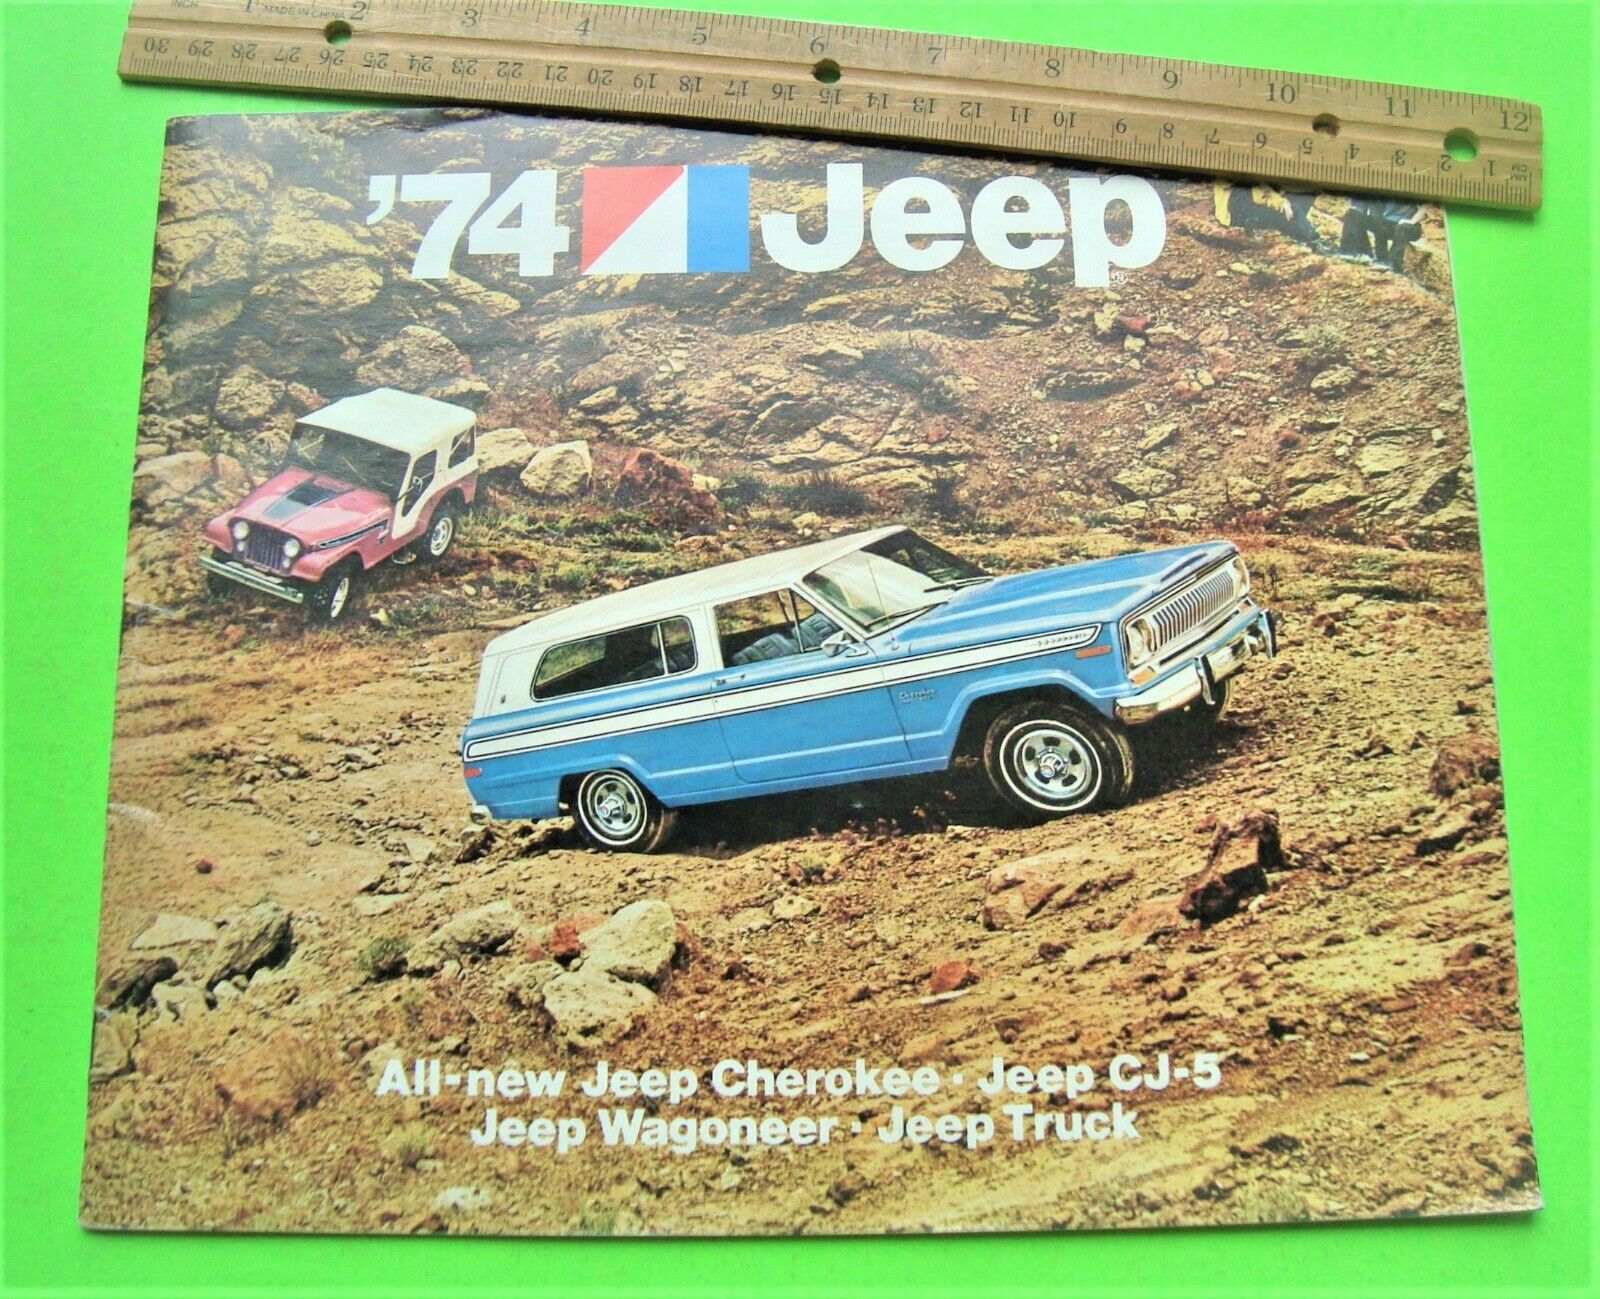 1974 Jeep Full Line Dlx Color Catalog Brochure 28-pgs Cj-5 Cherokee Pick-up 4x4